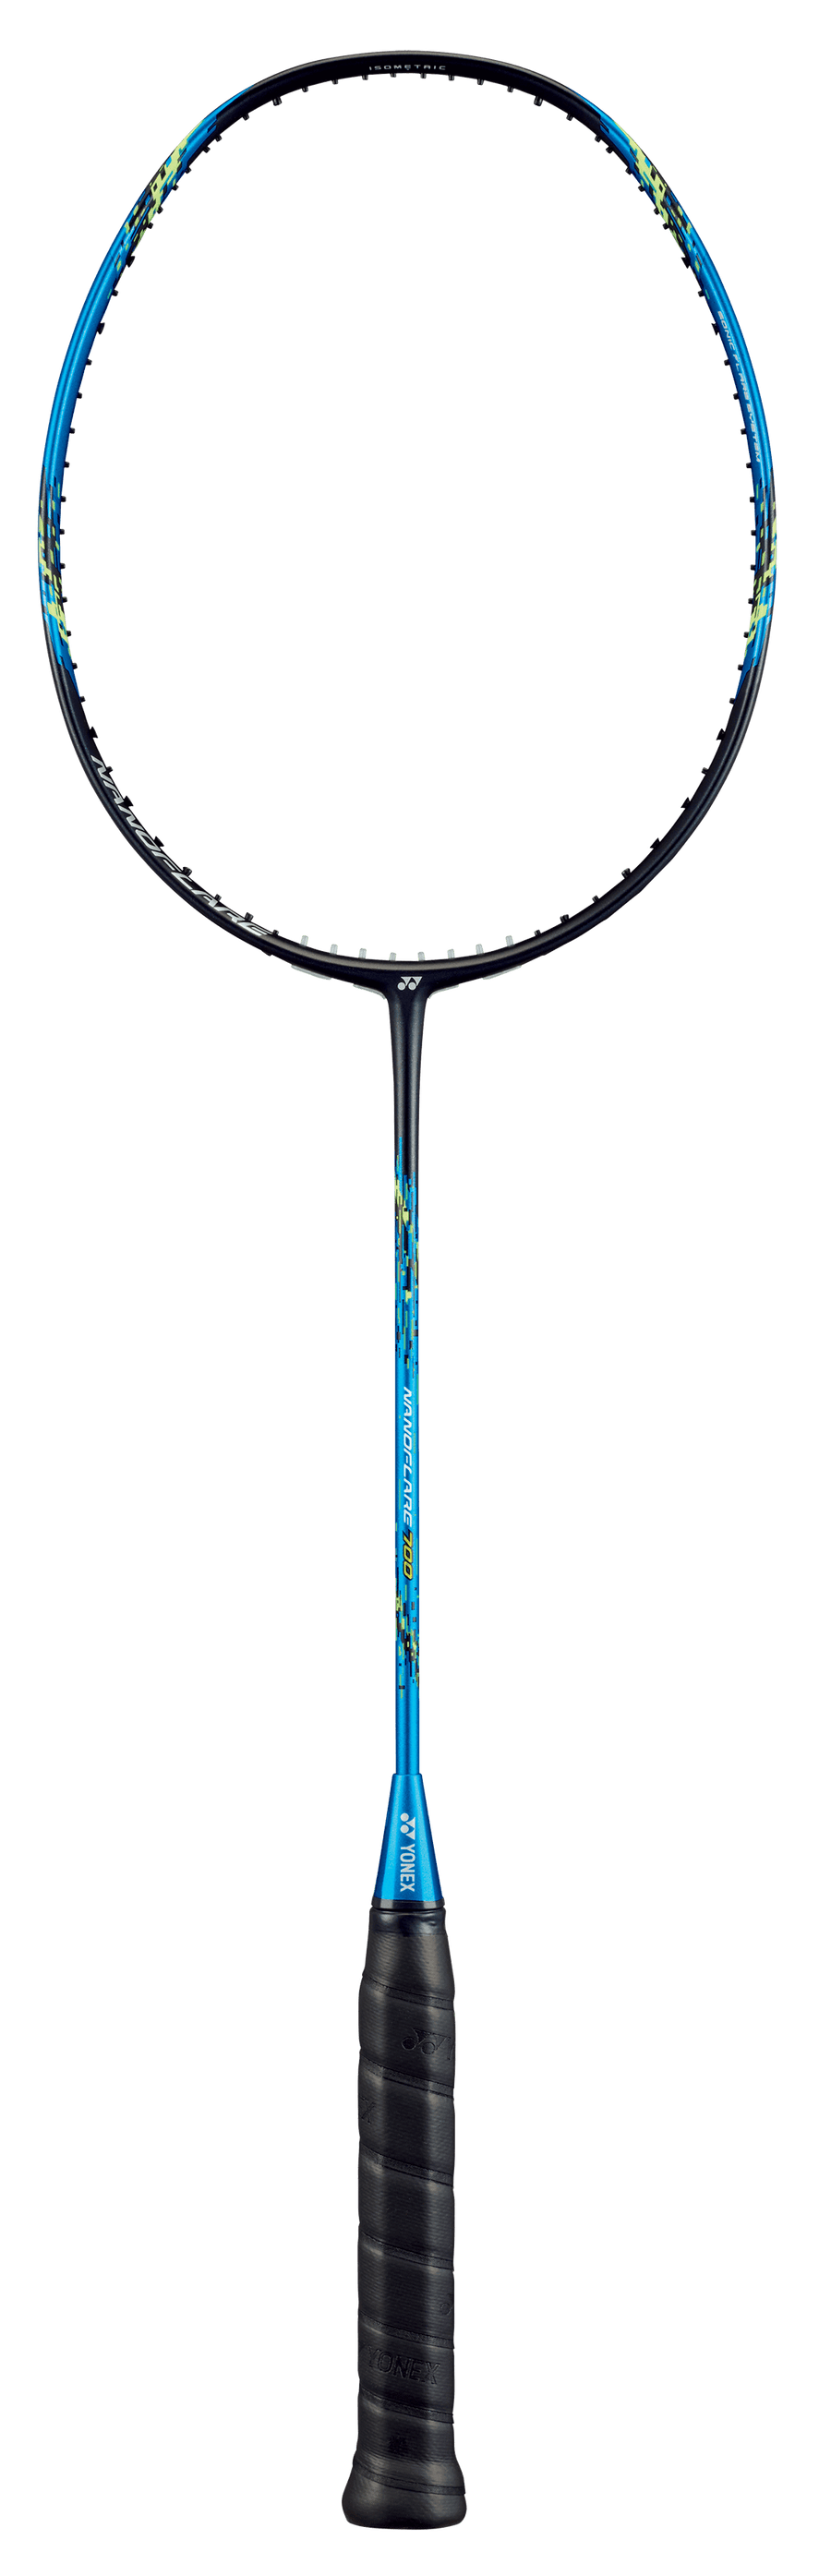 Yonex Nanoflare 700 4U Badminton Racket (Frame) Badminton Racquets Yonex G4 Cyan/Blue 